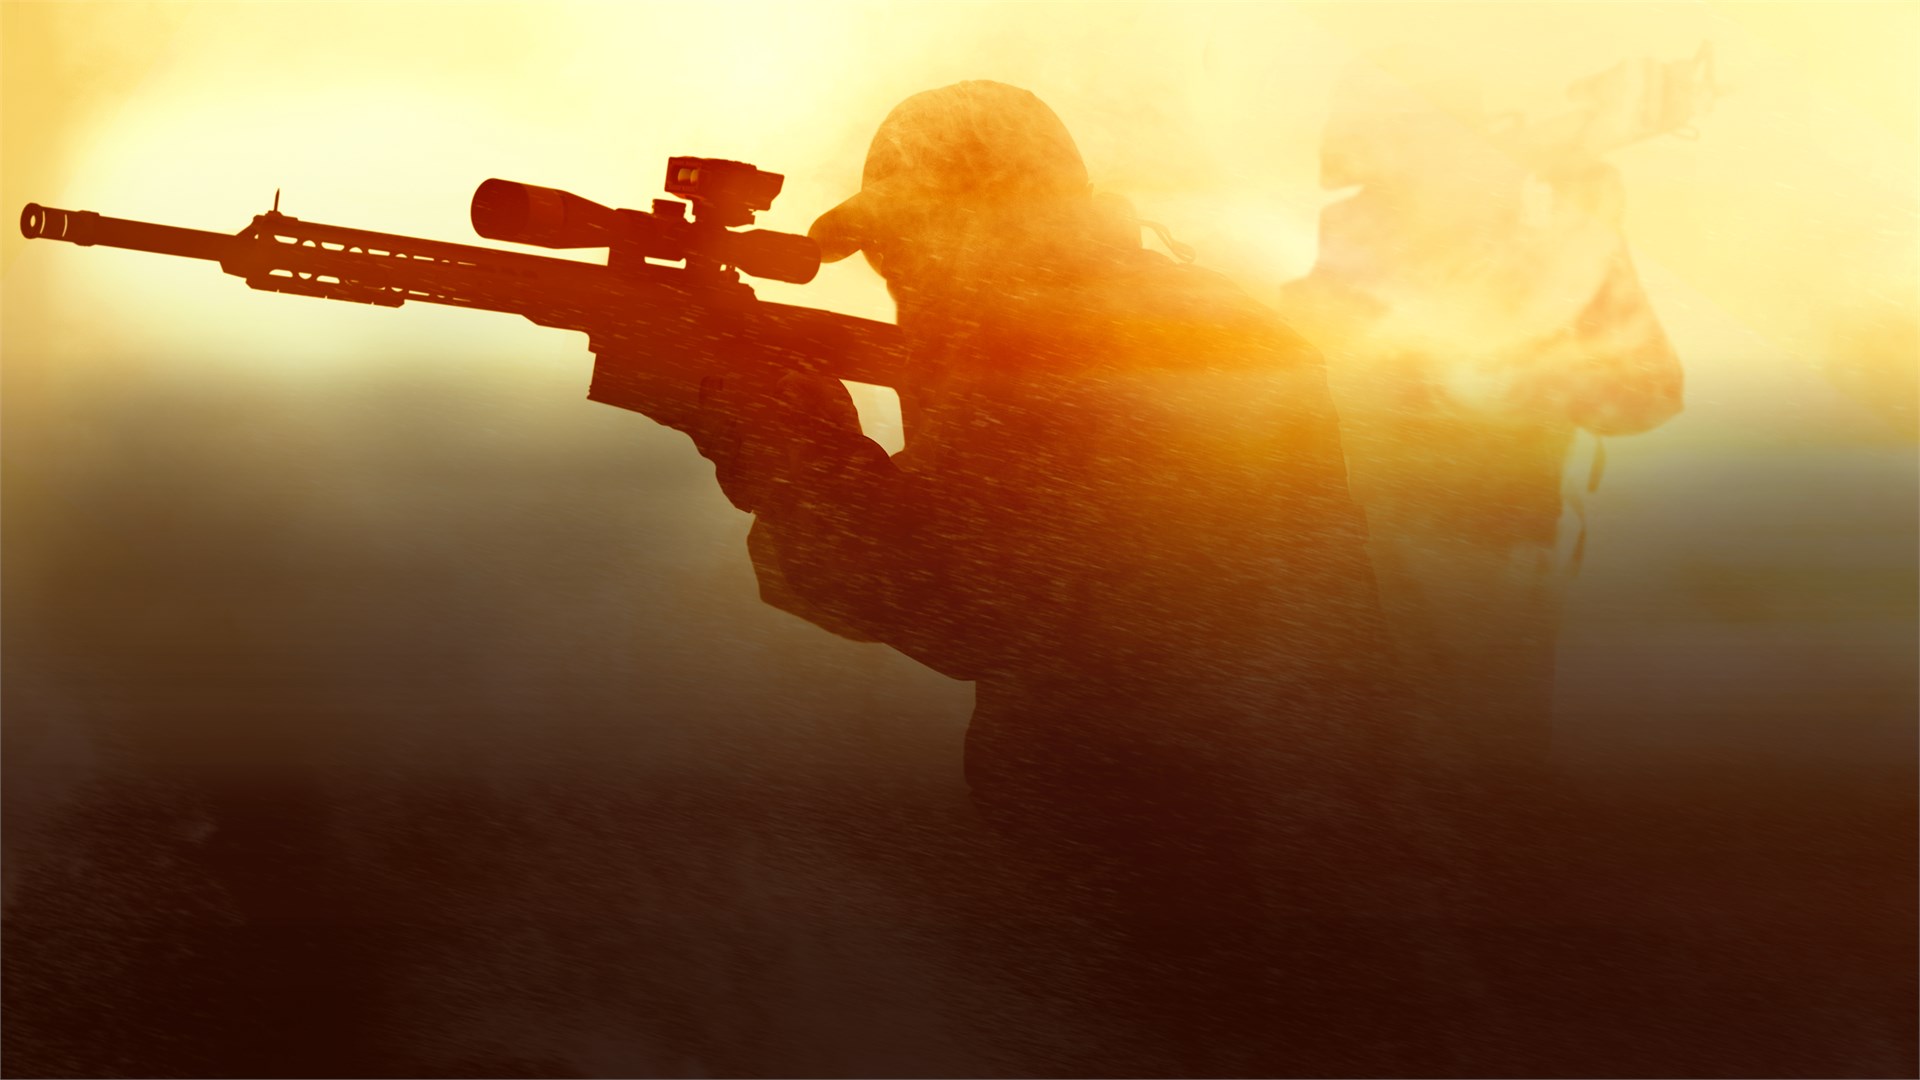 Call of Duty®: Modern Warfare® II - Pacote Pro: Grifo - Call of Duty